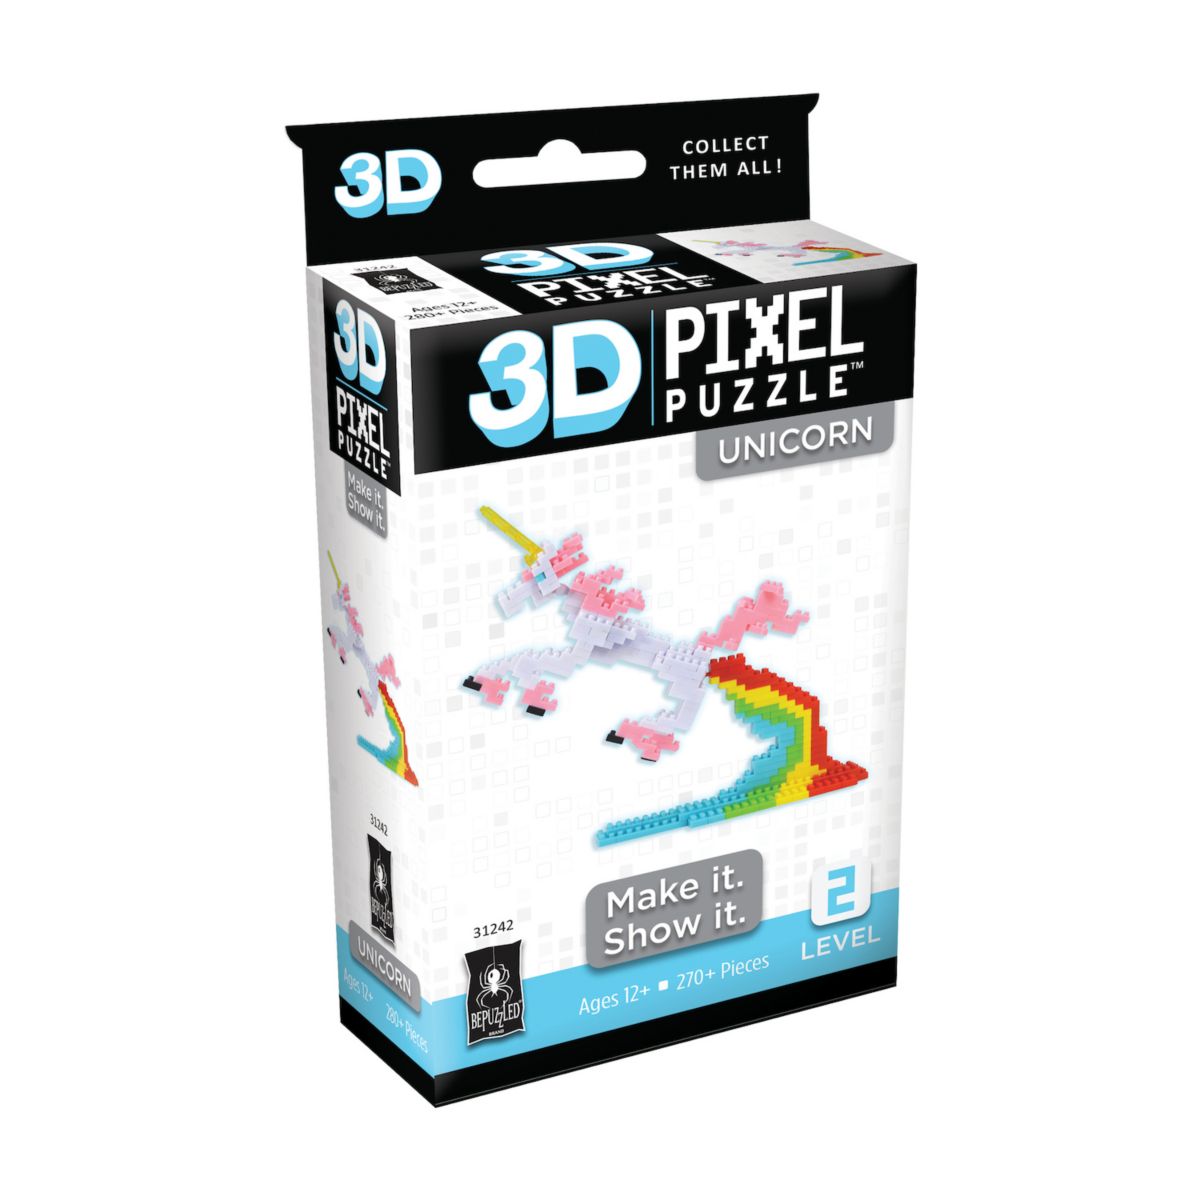 Университетские игры 3D Pixel Puzzle - Unicorn 270-Pieces University Games